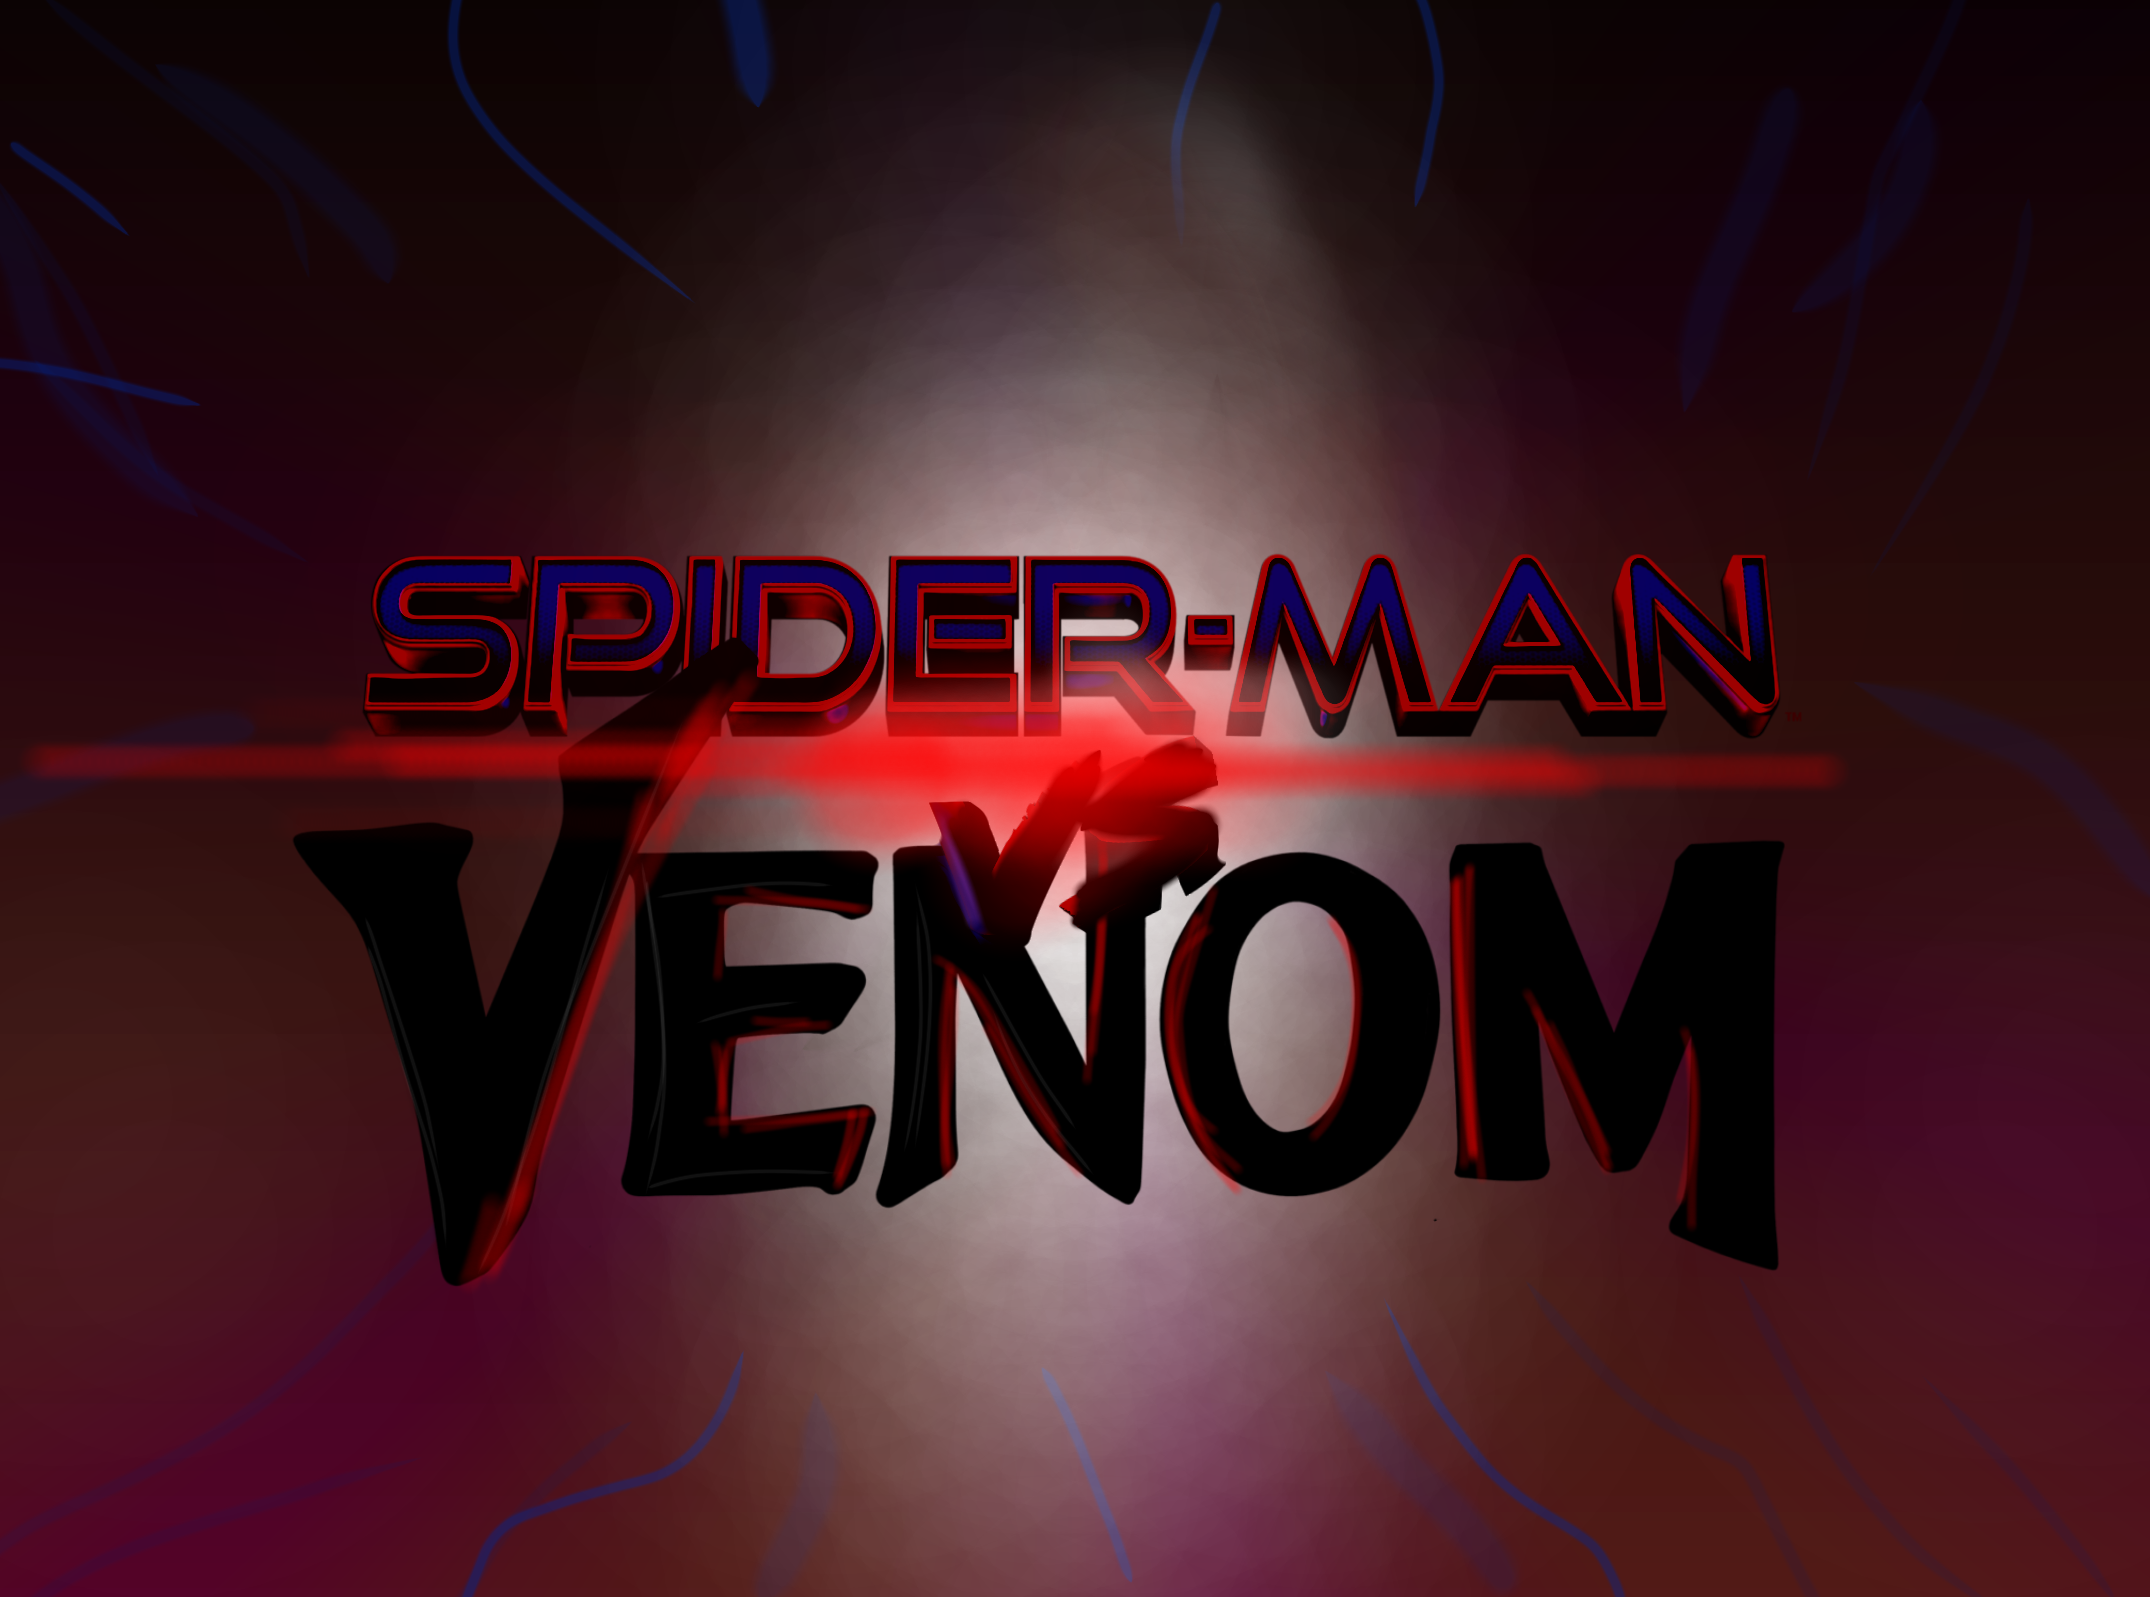 Spiderman Vs Venom-Poster by MaxerAlfa017 on DeviantArt